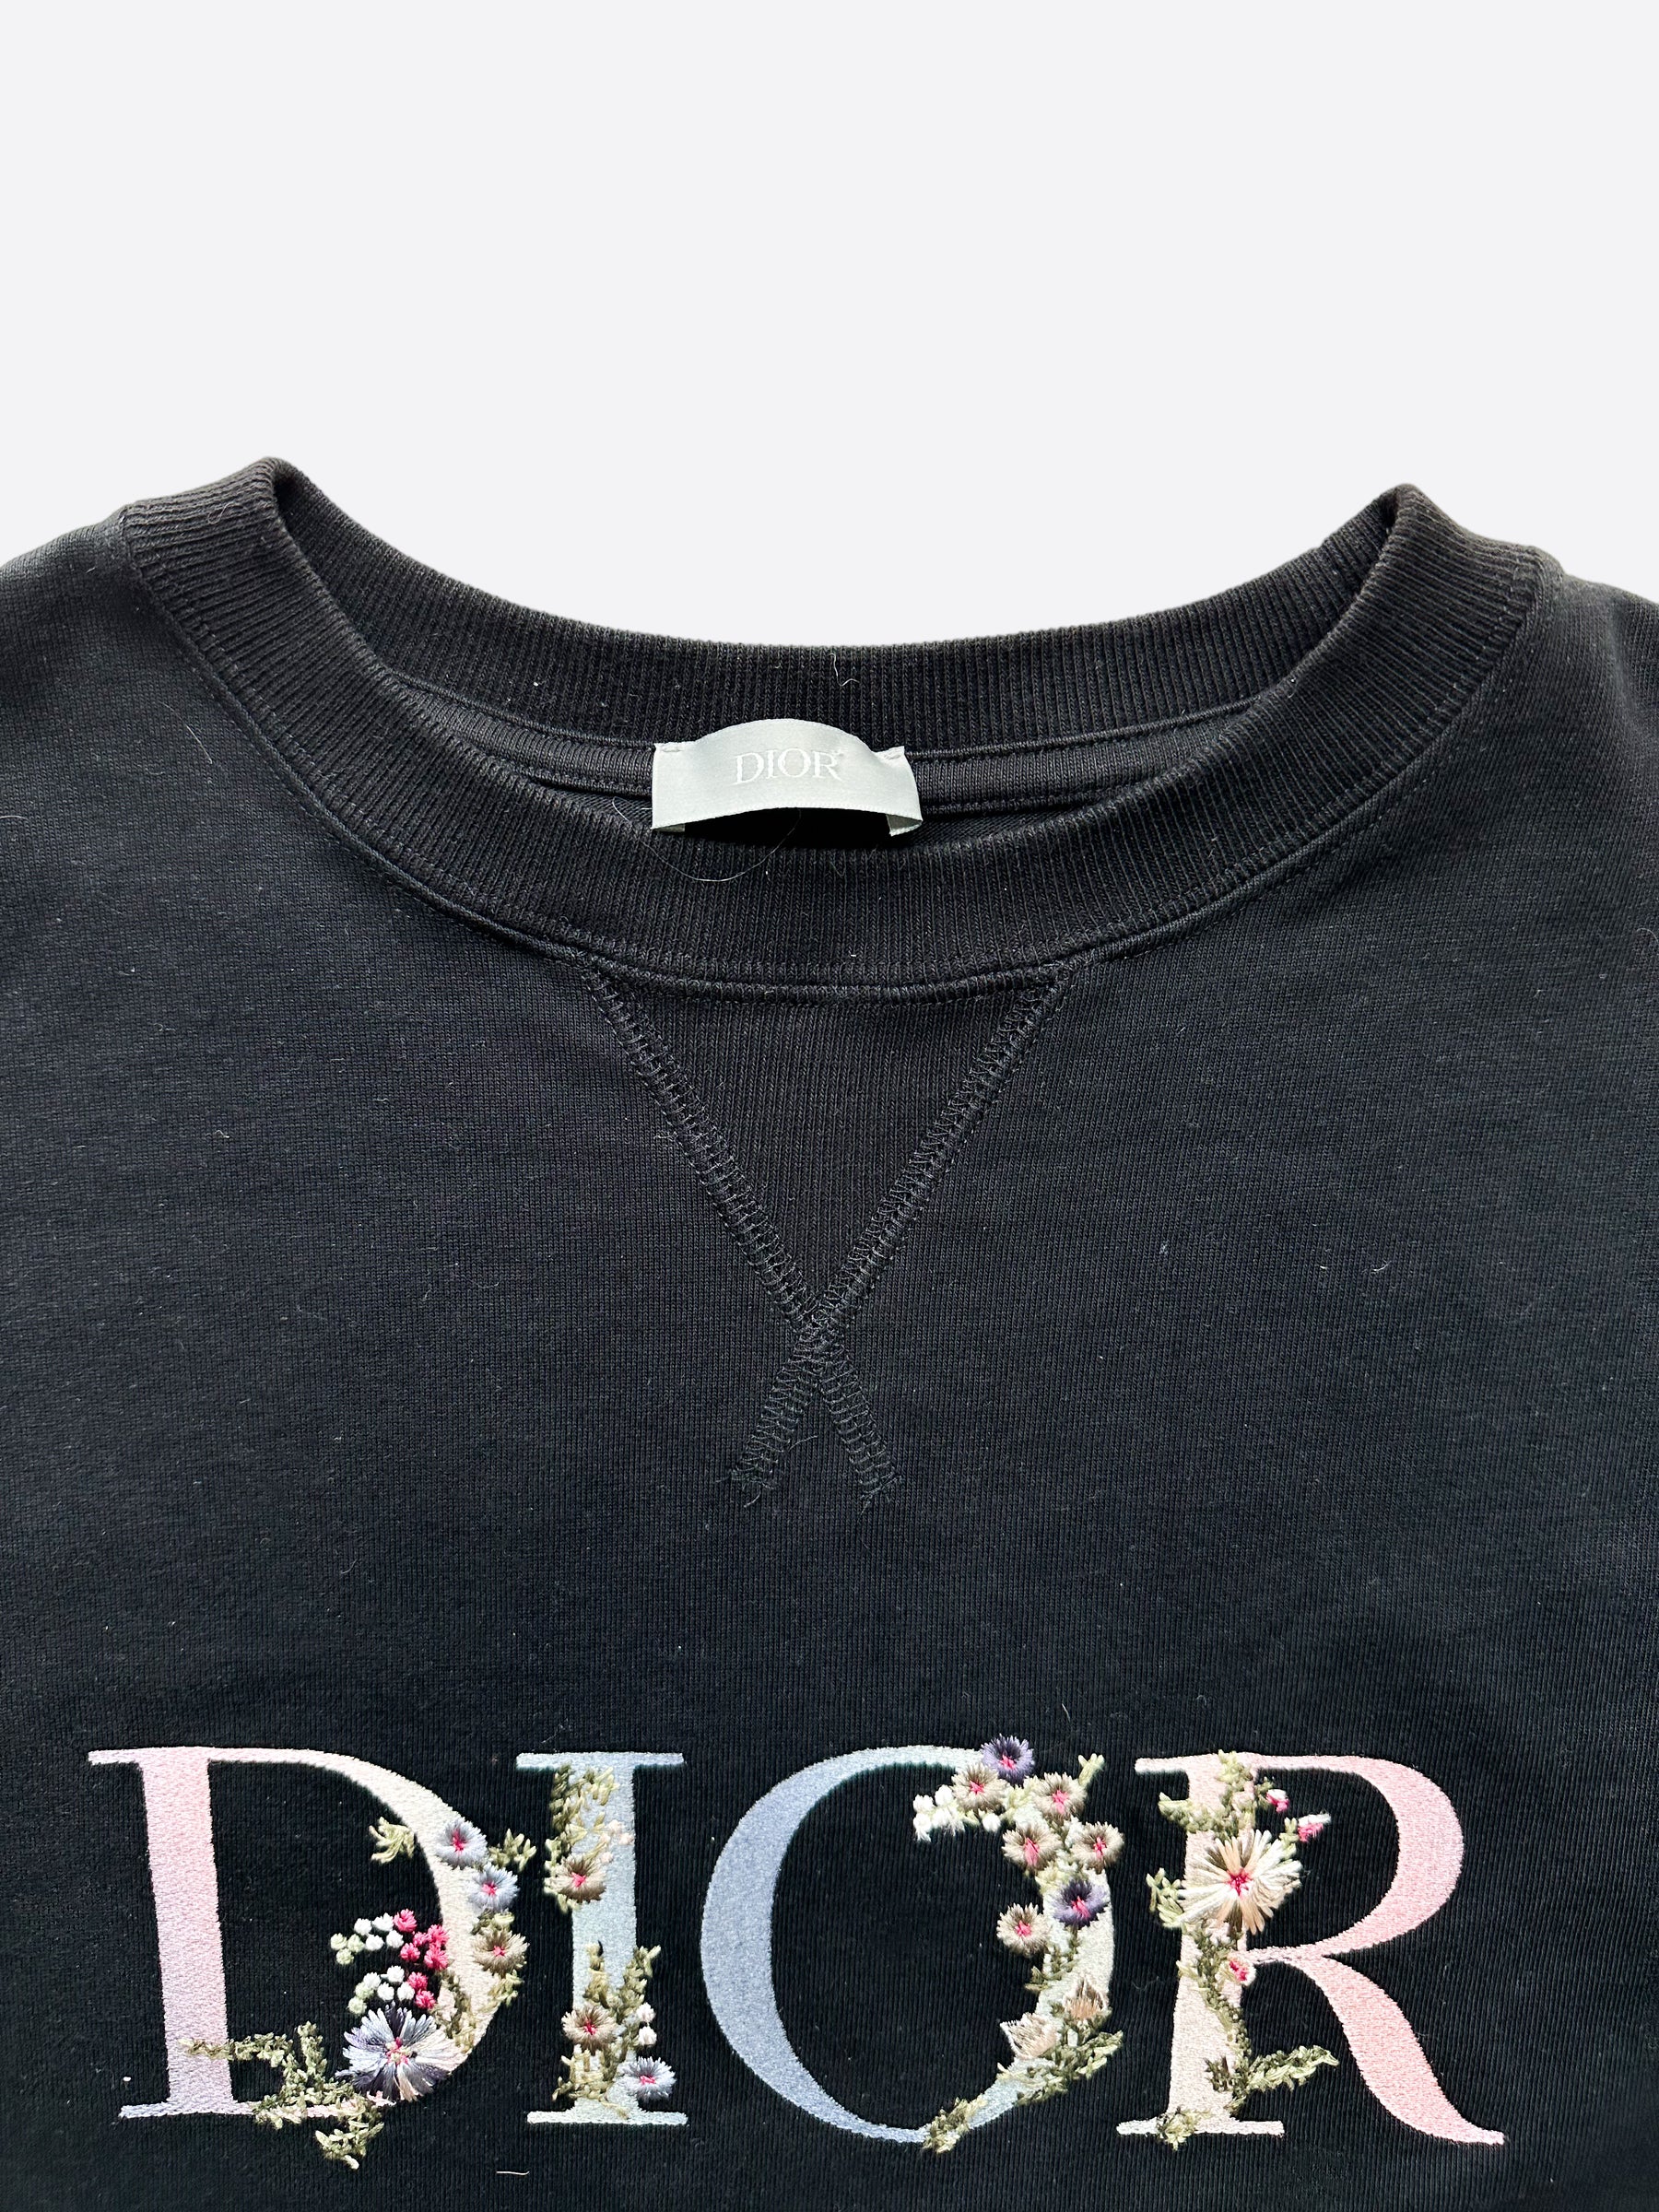 Dior Black Floral Logo Embroidered T-Shirt